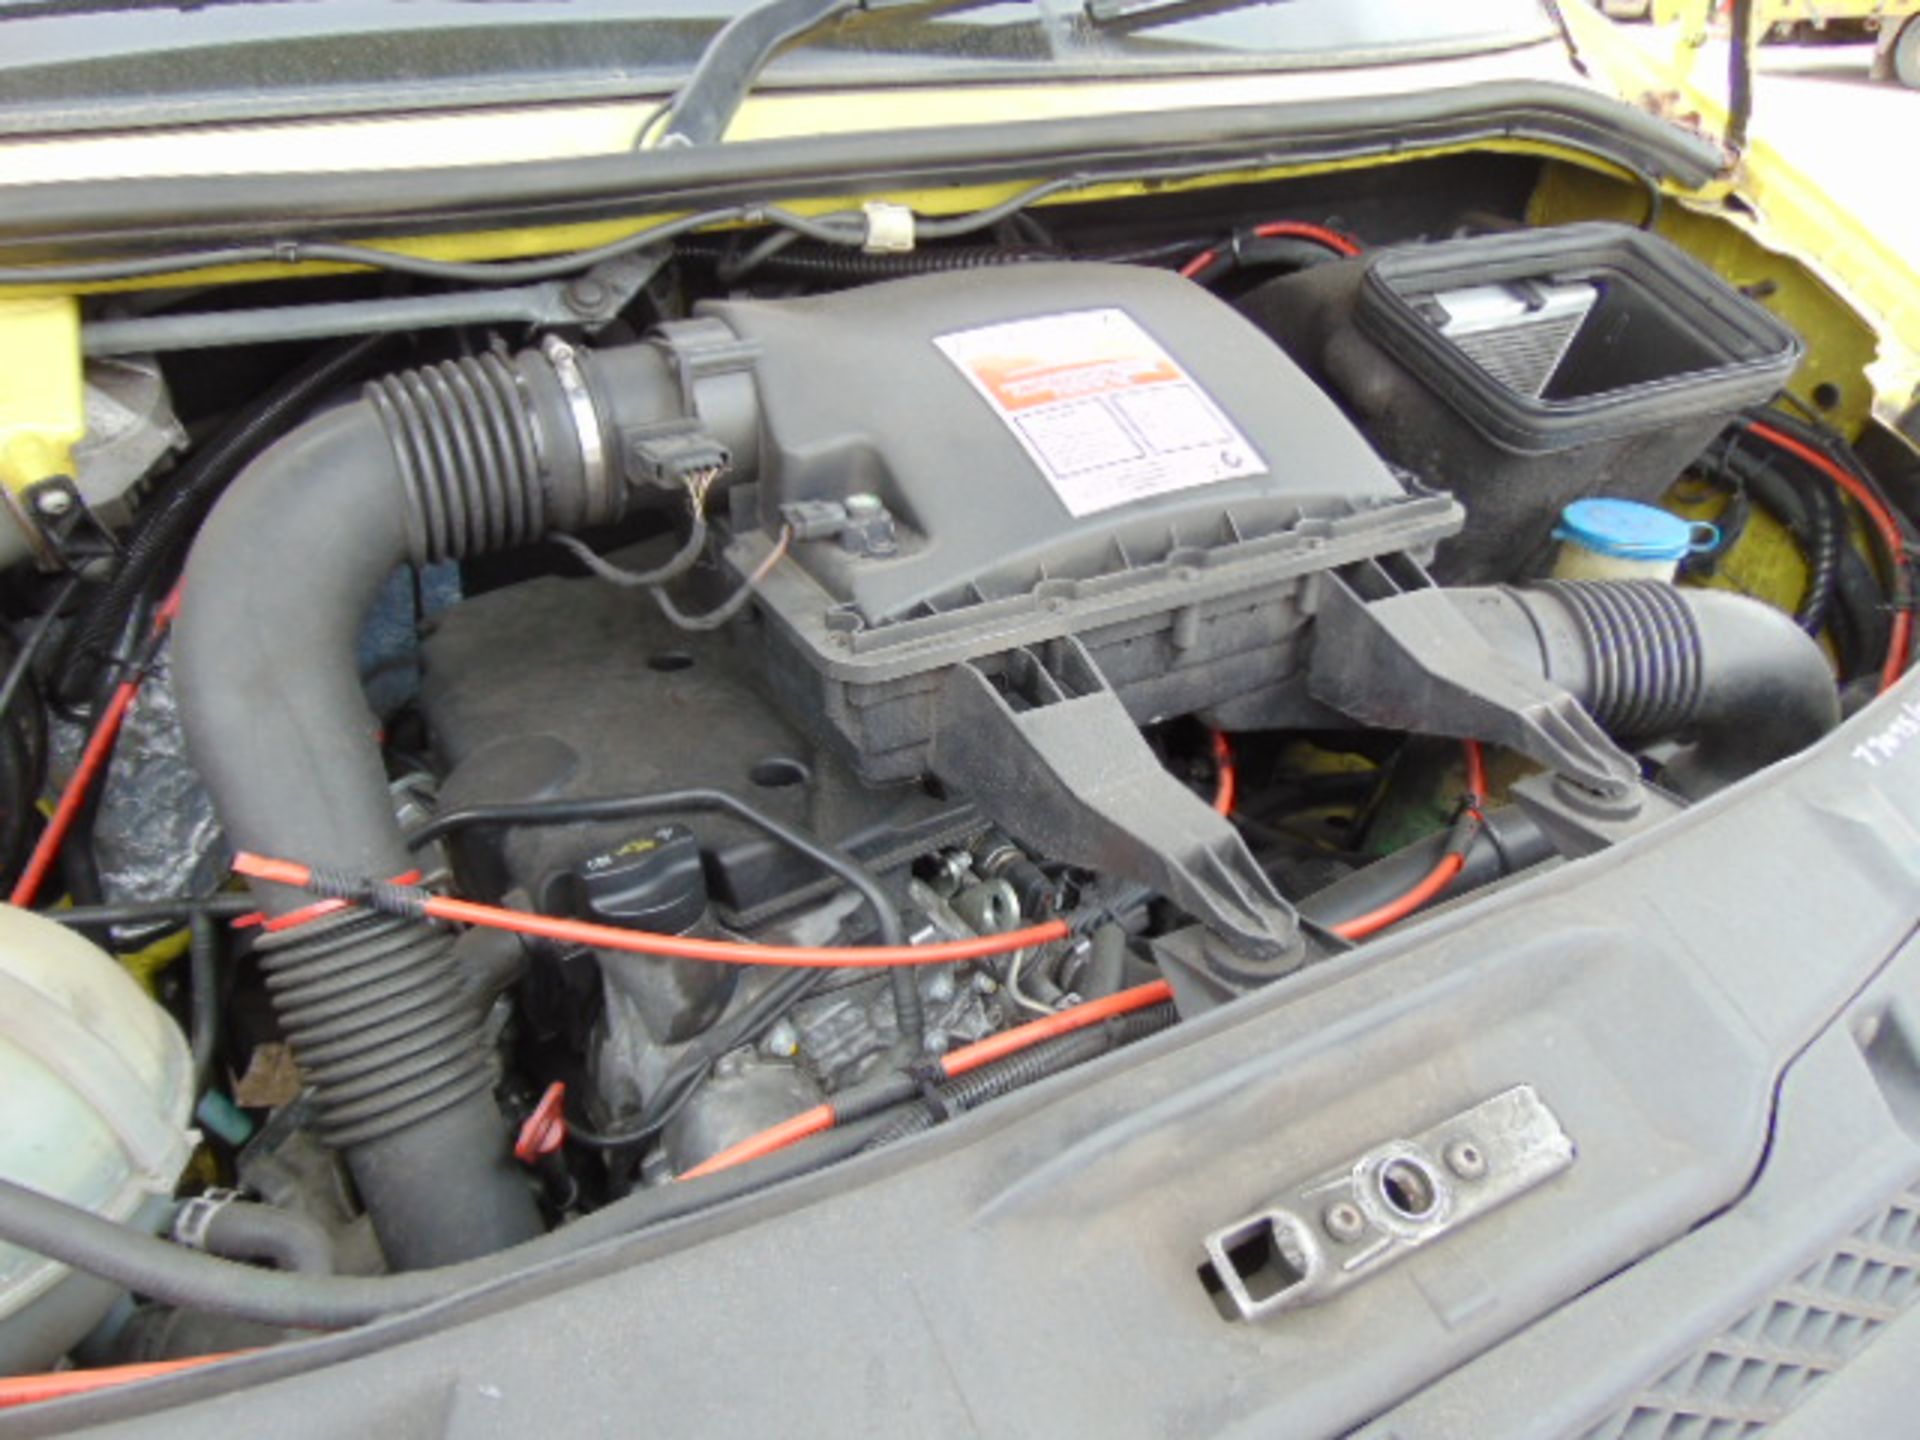 Mercedes Sprinter 515 CDI Turbo diesel ambulance - Image 17 of 18